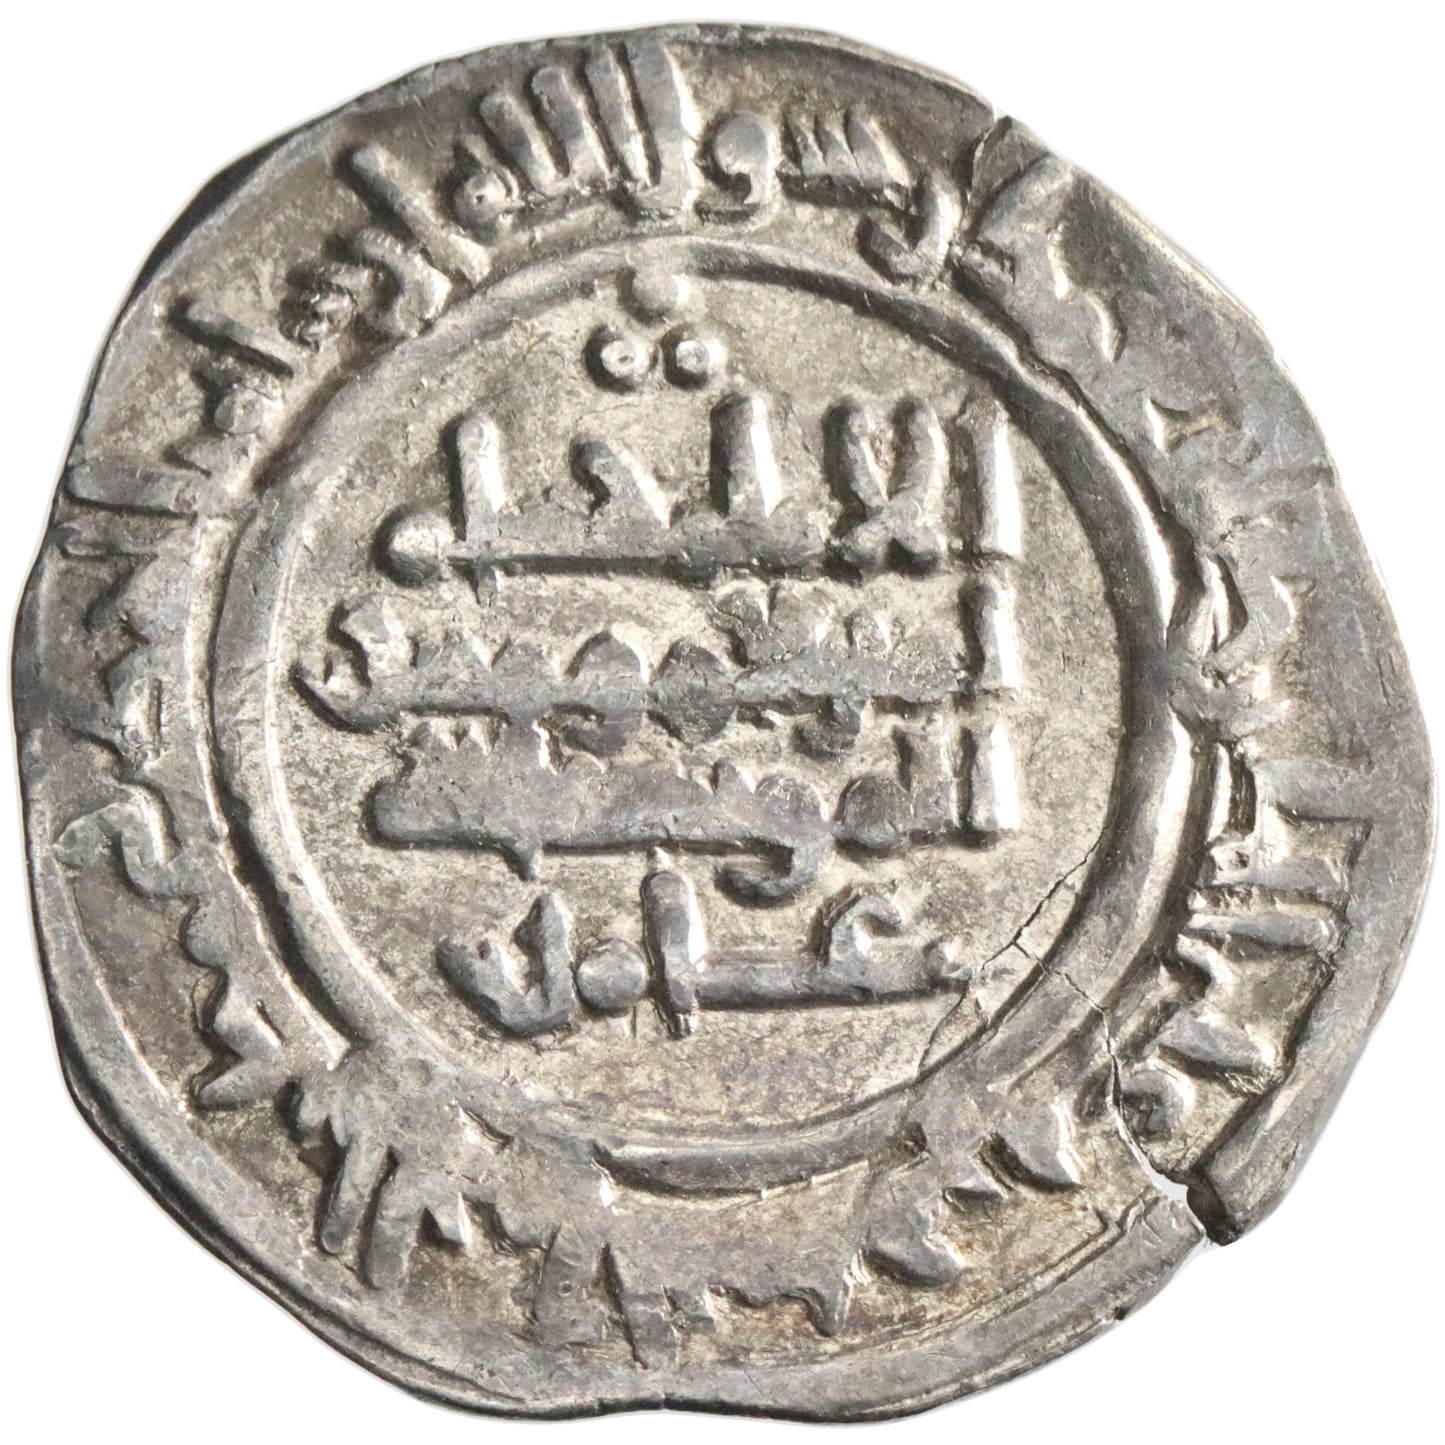 Umayyad of Spain, Hisham II, silver dirham, al-Andalus (Spain) mint, AH 386, citing 'Amir and Mufarrij